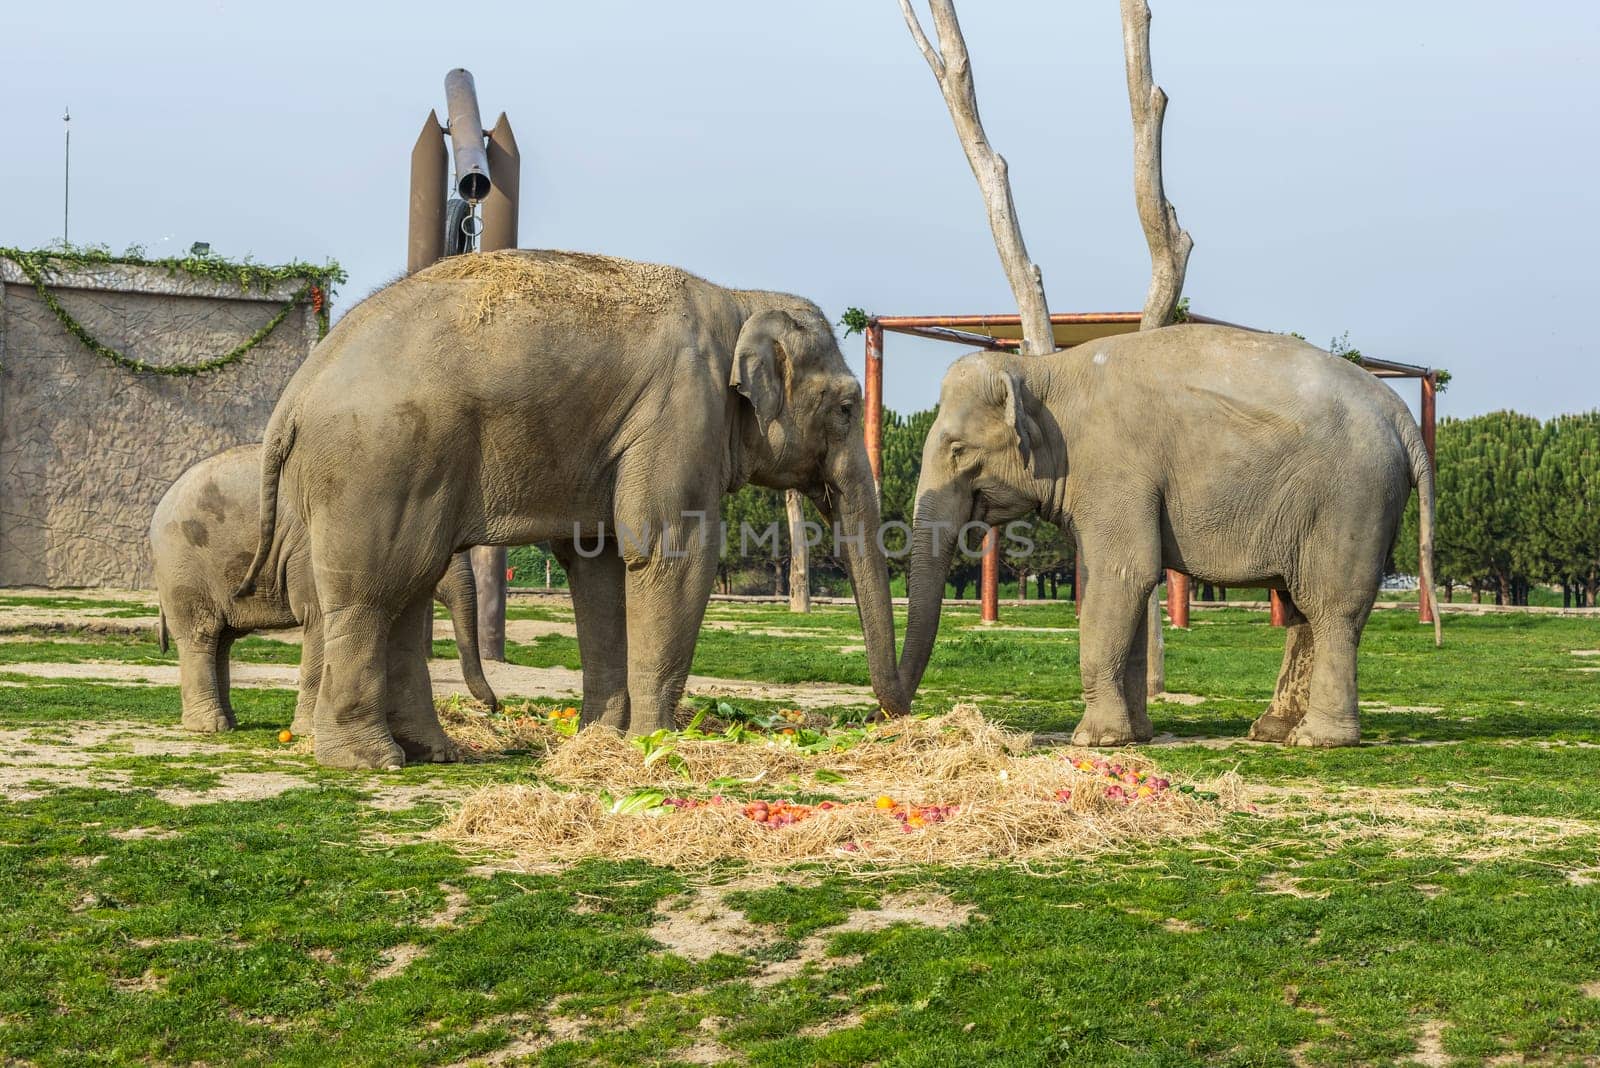 Elephant Family by emirkoo